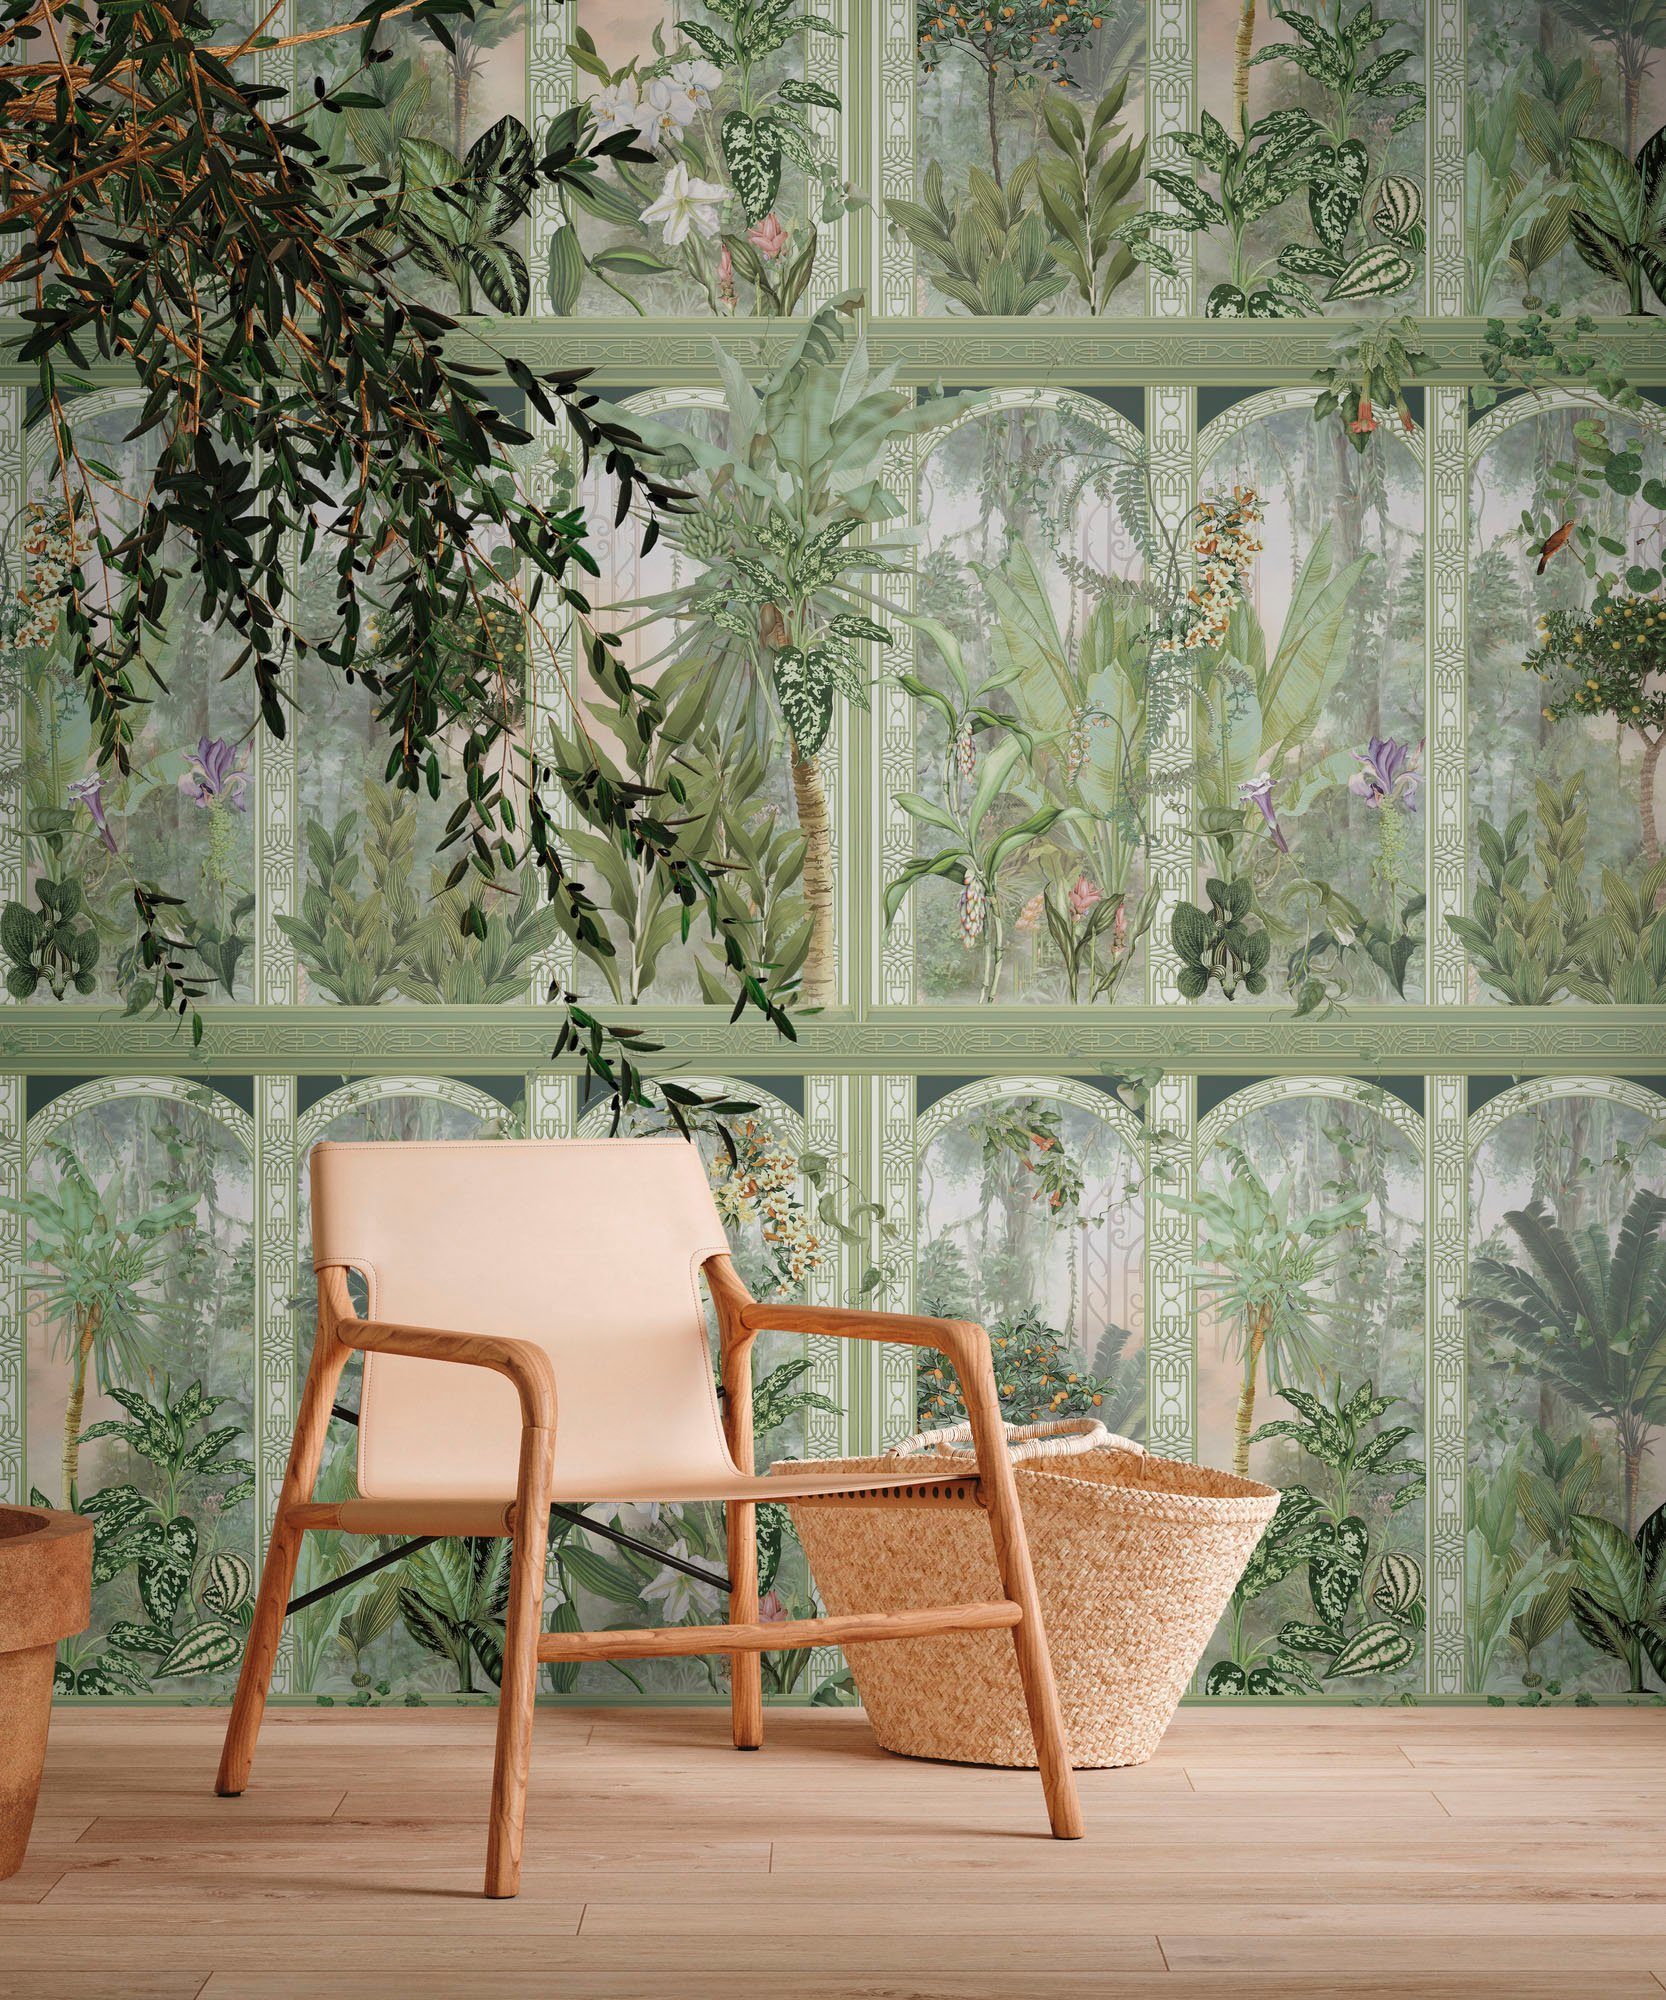 matt, (1 glatt, living Antik Fototapete Dschungeltapete Pflanzen St), Klassich Fototapete walls Floral,